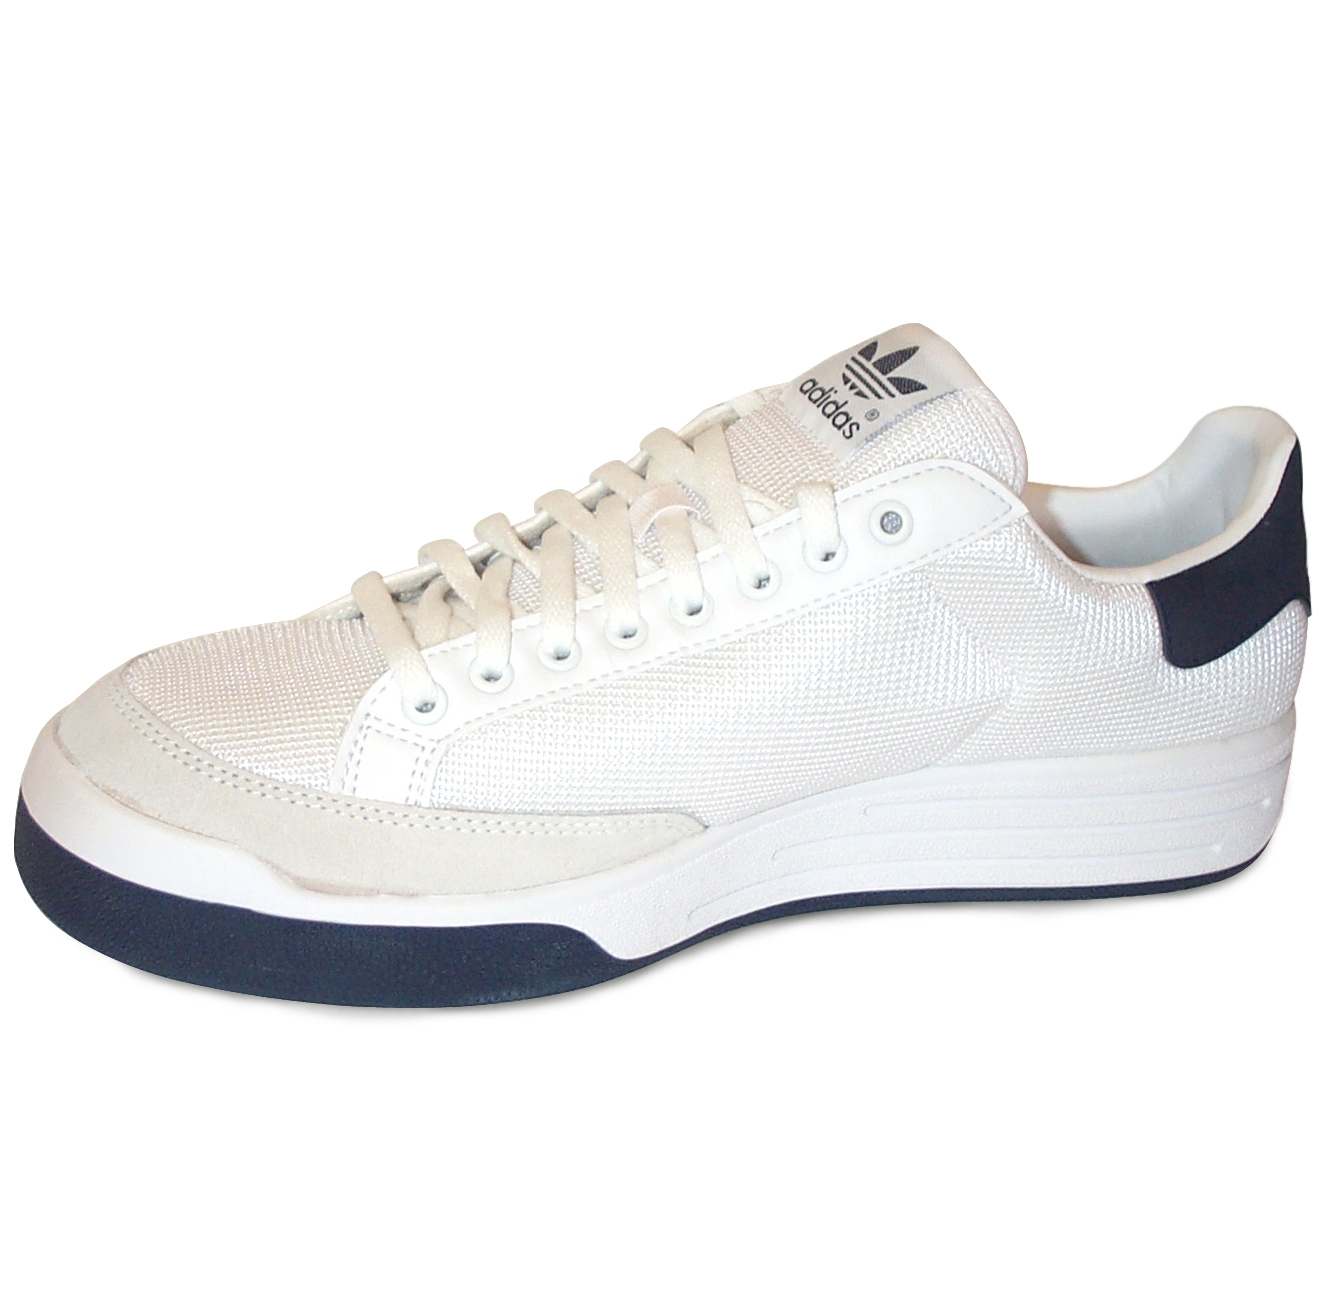 Adidas Rod Laver Super Tennis Shoe White/Navy | World Footbag